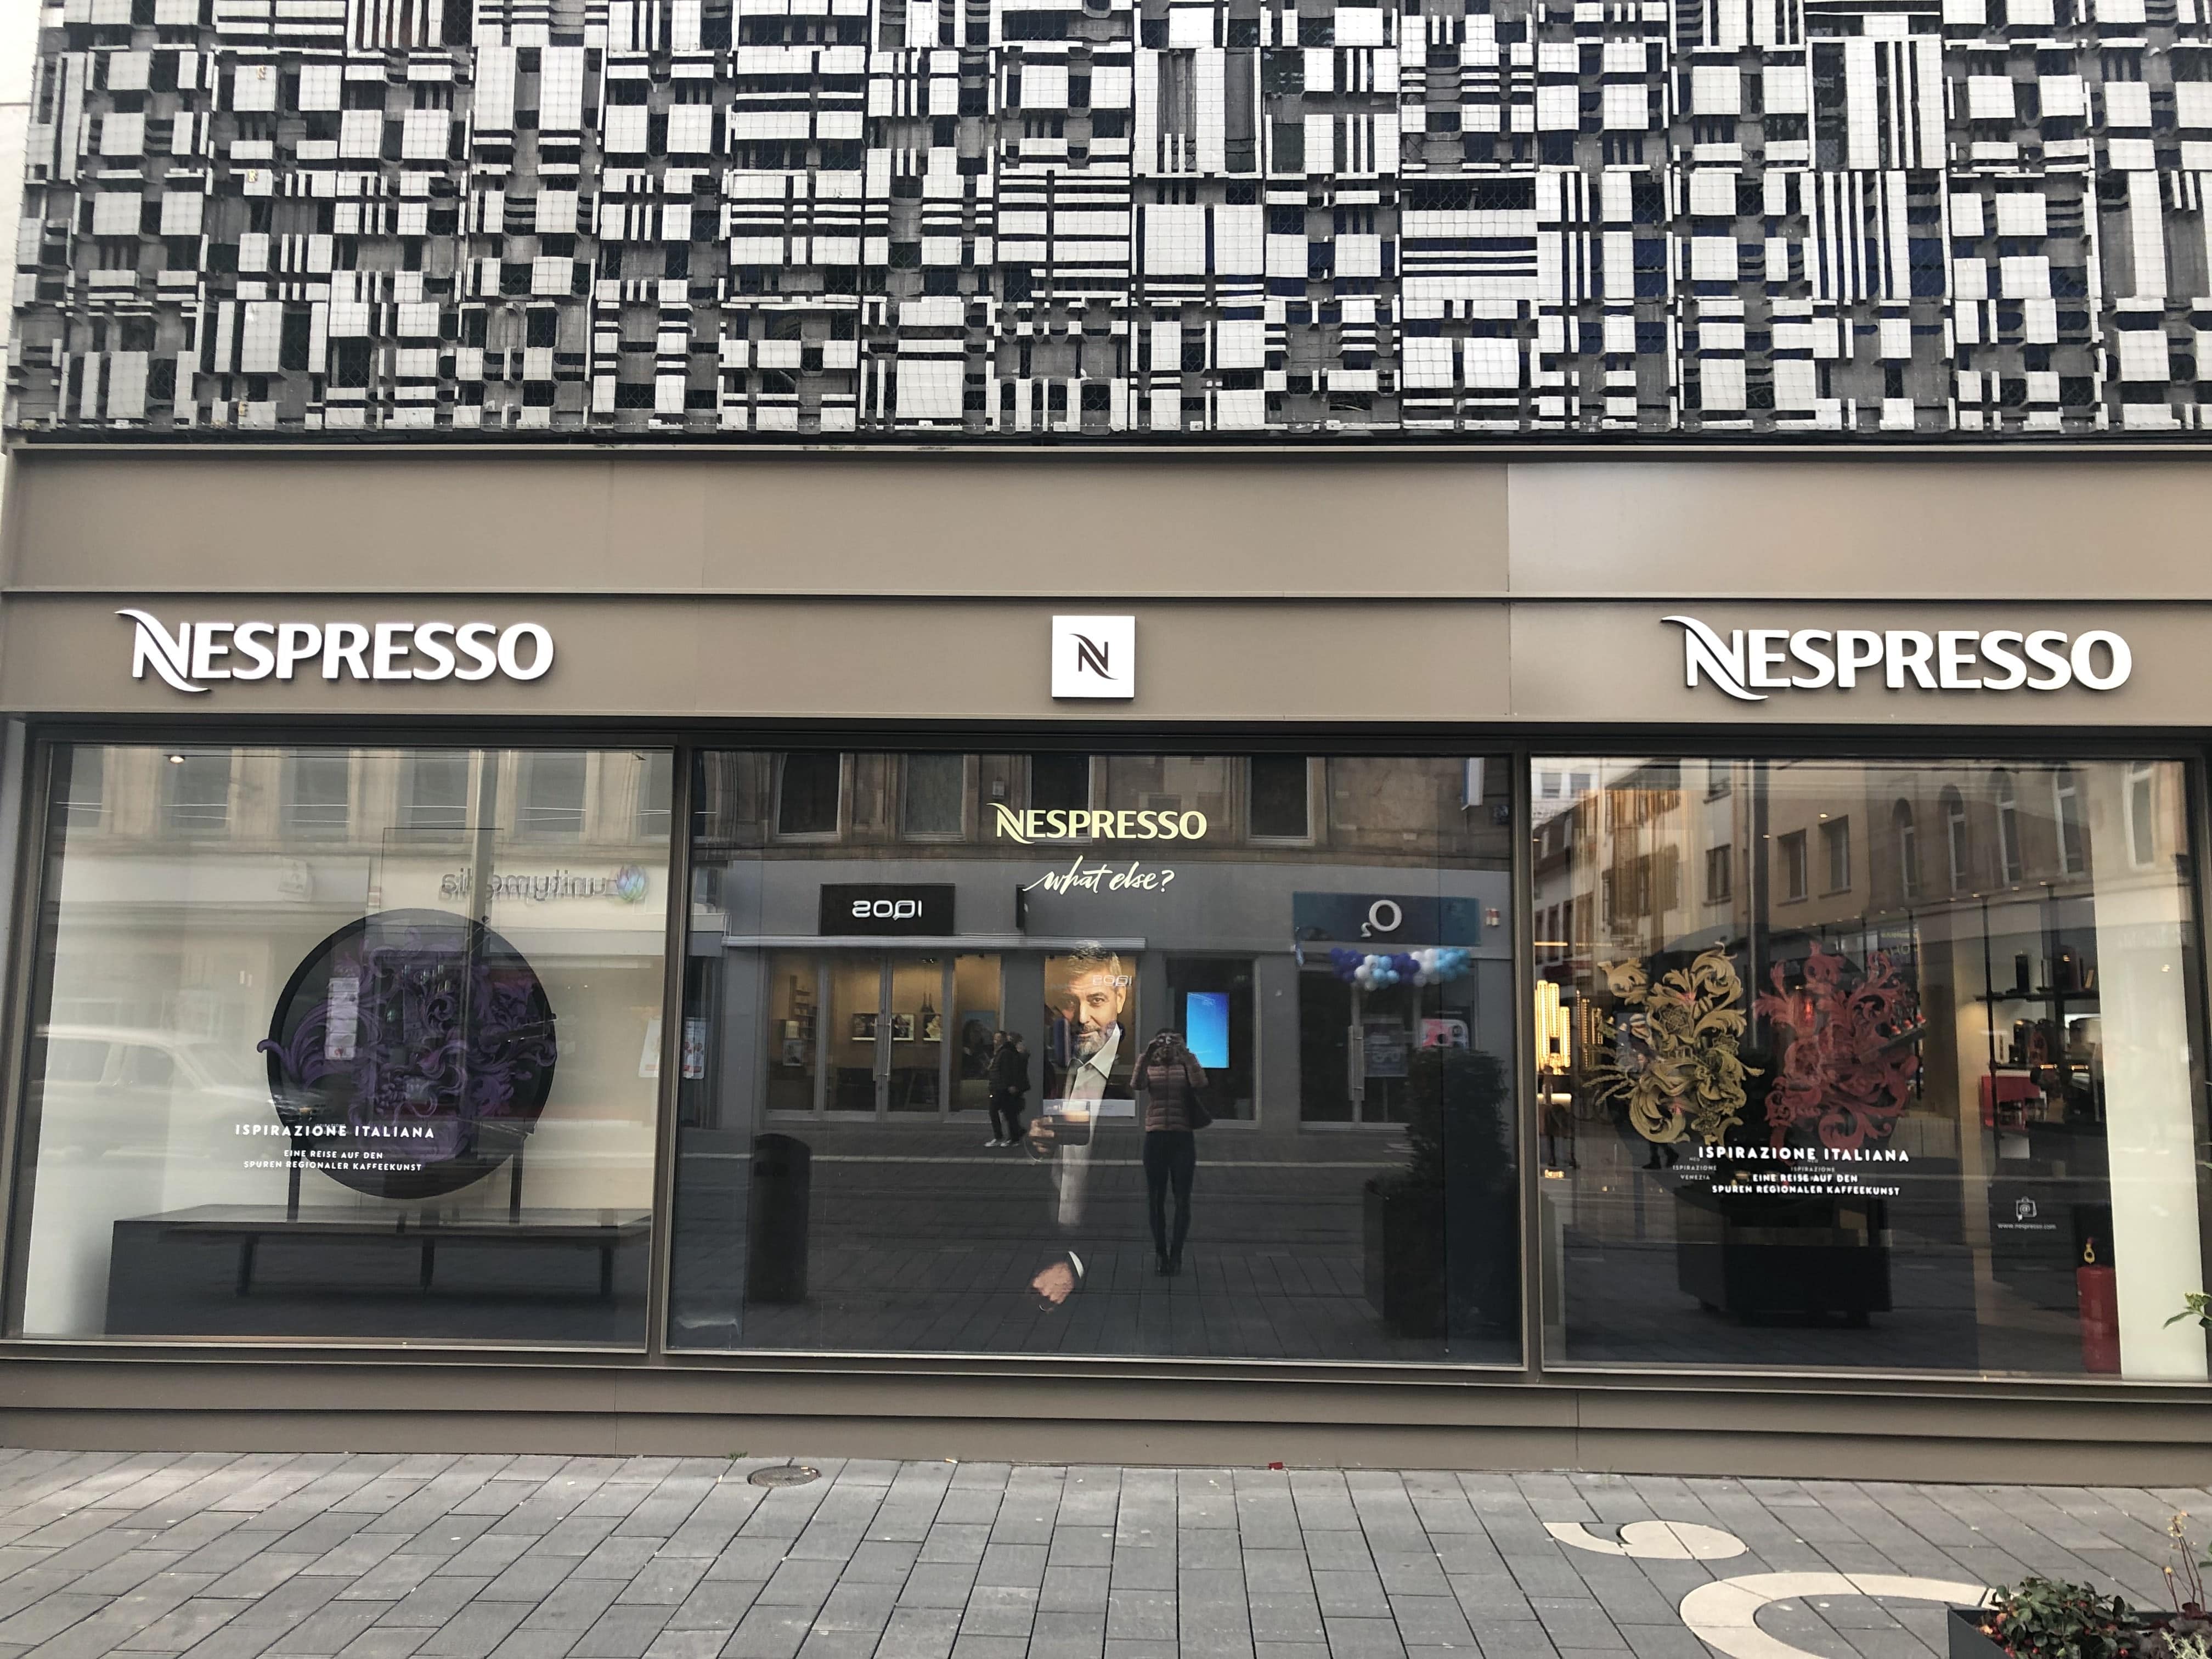 Nespresso store front